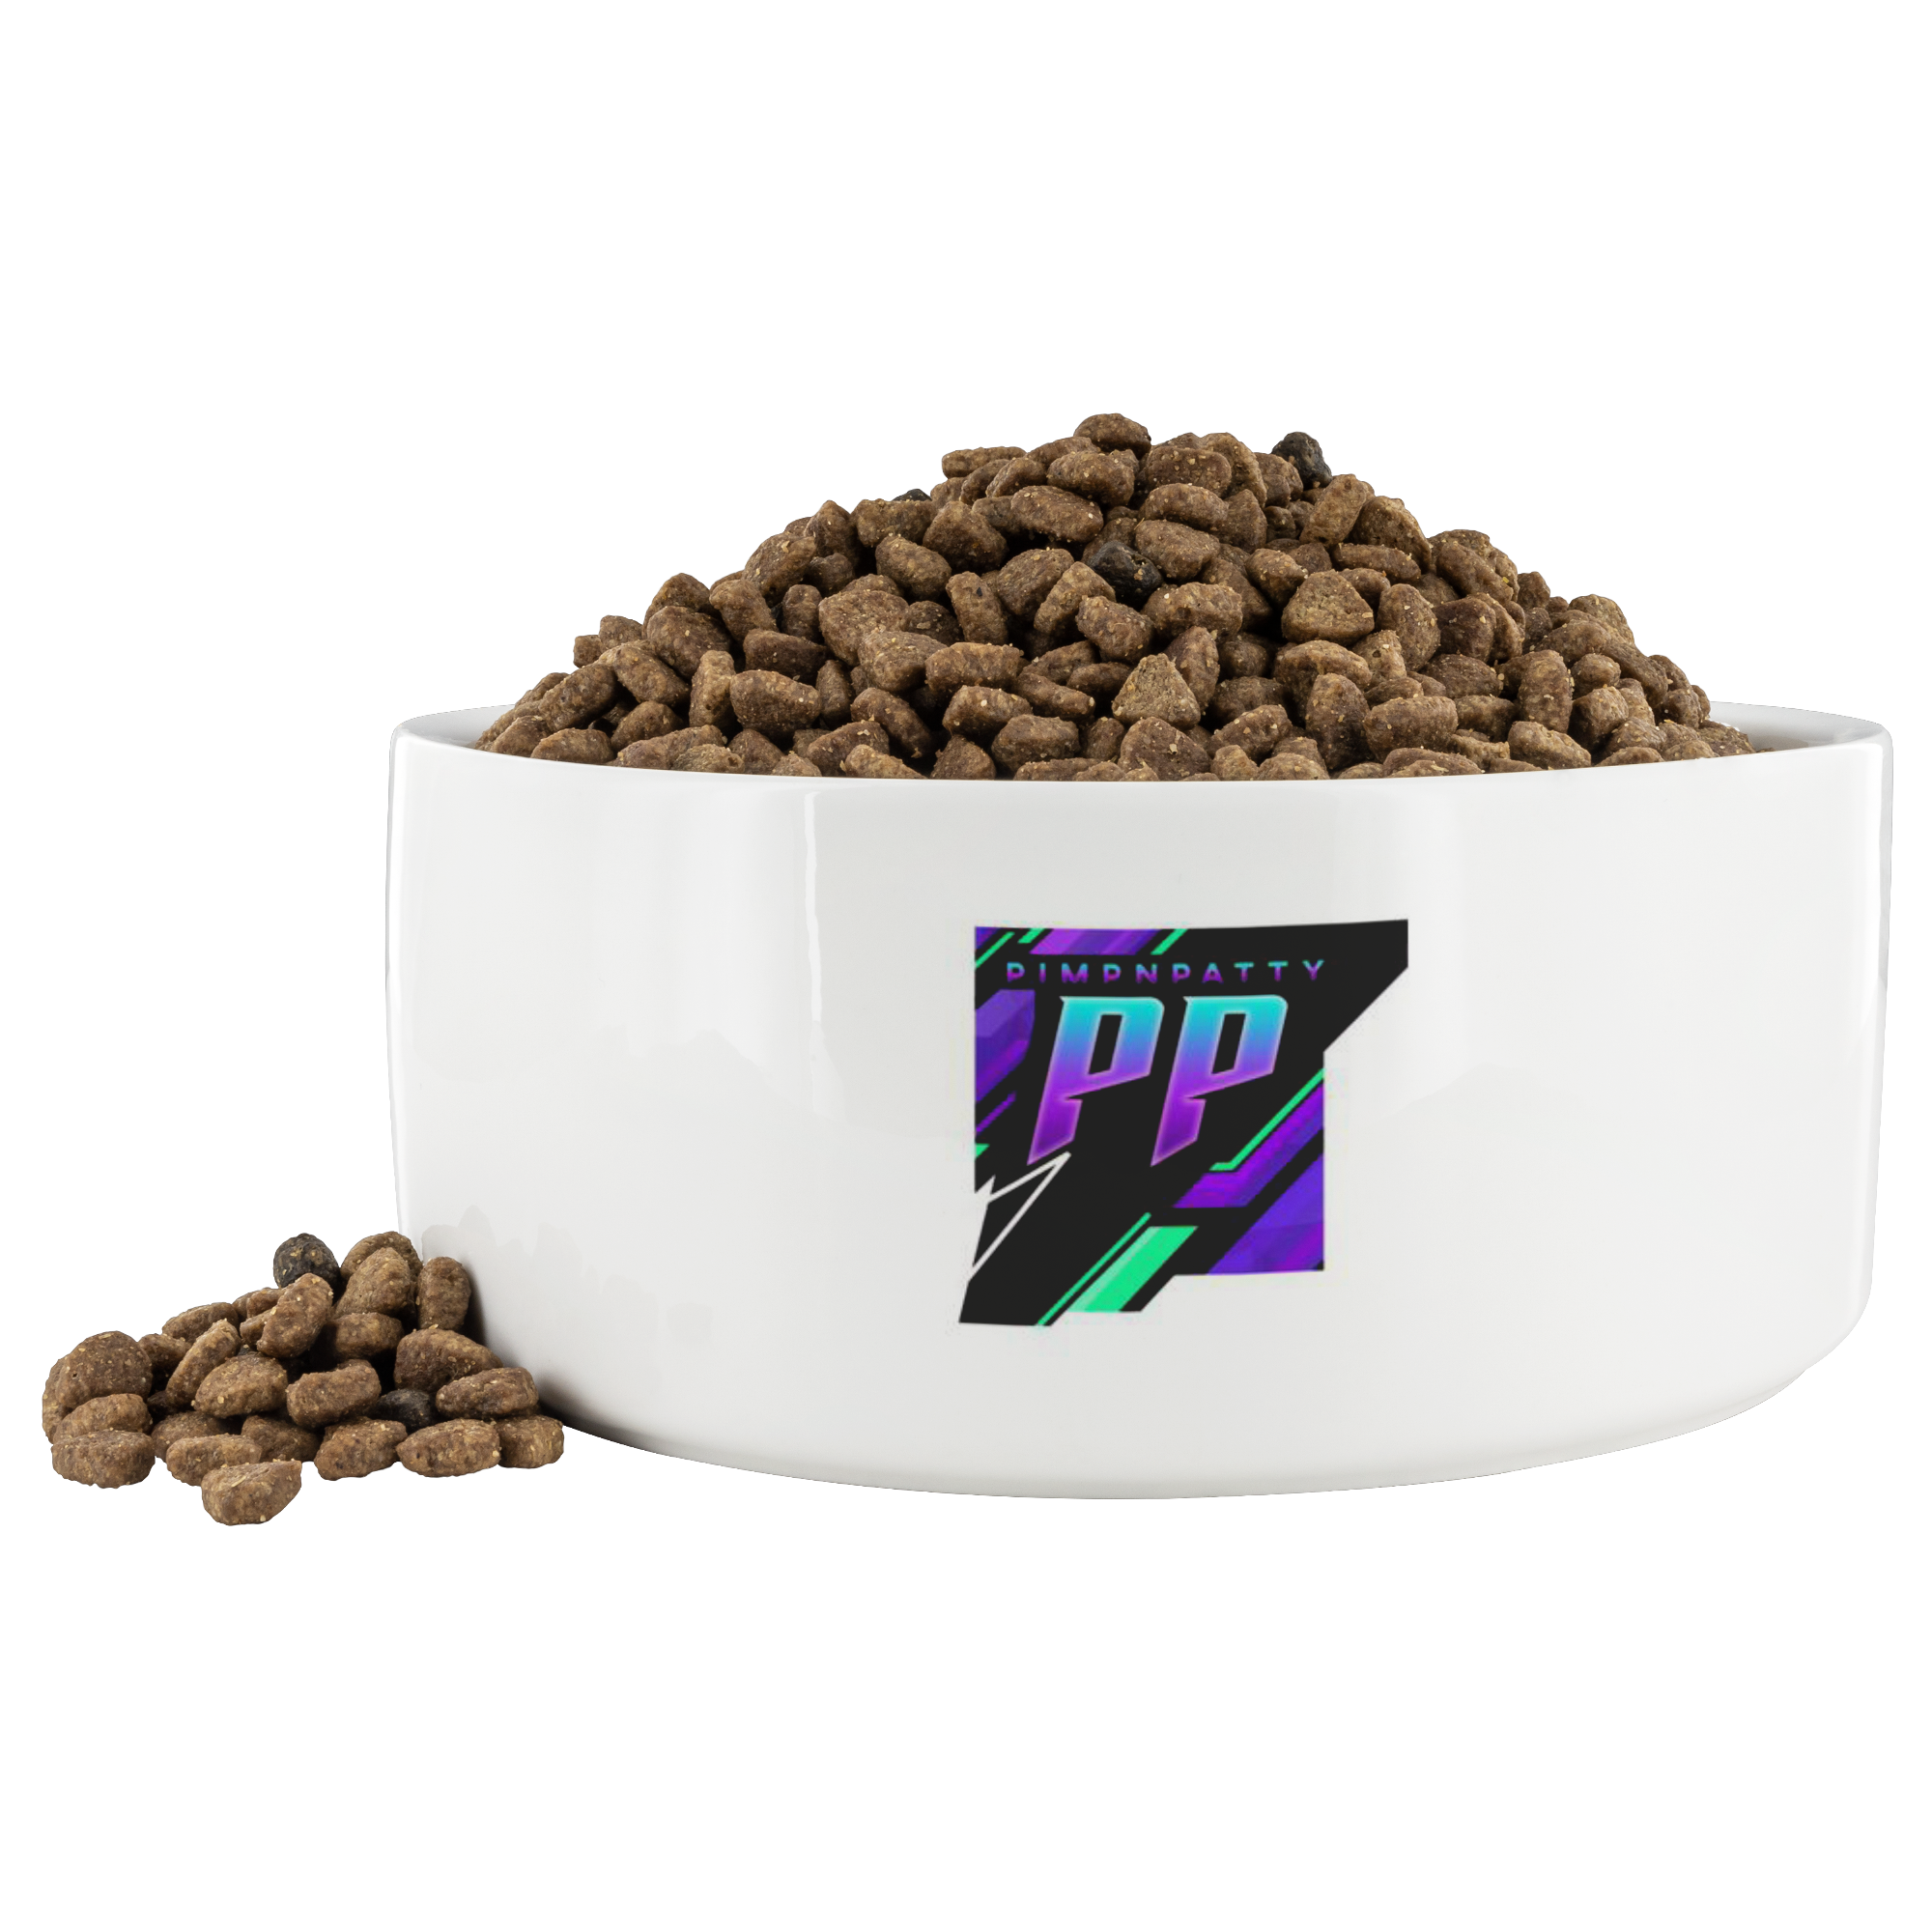 pnp White Ceramic Pet Bowl